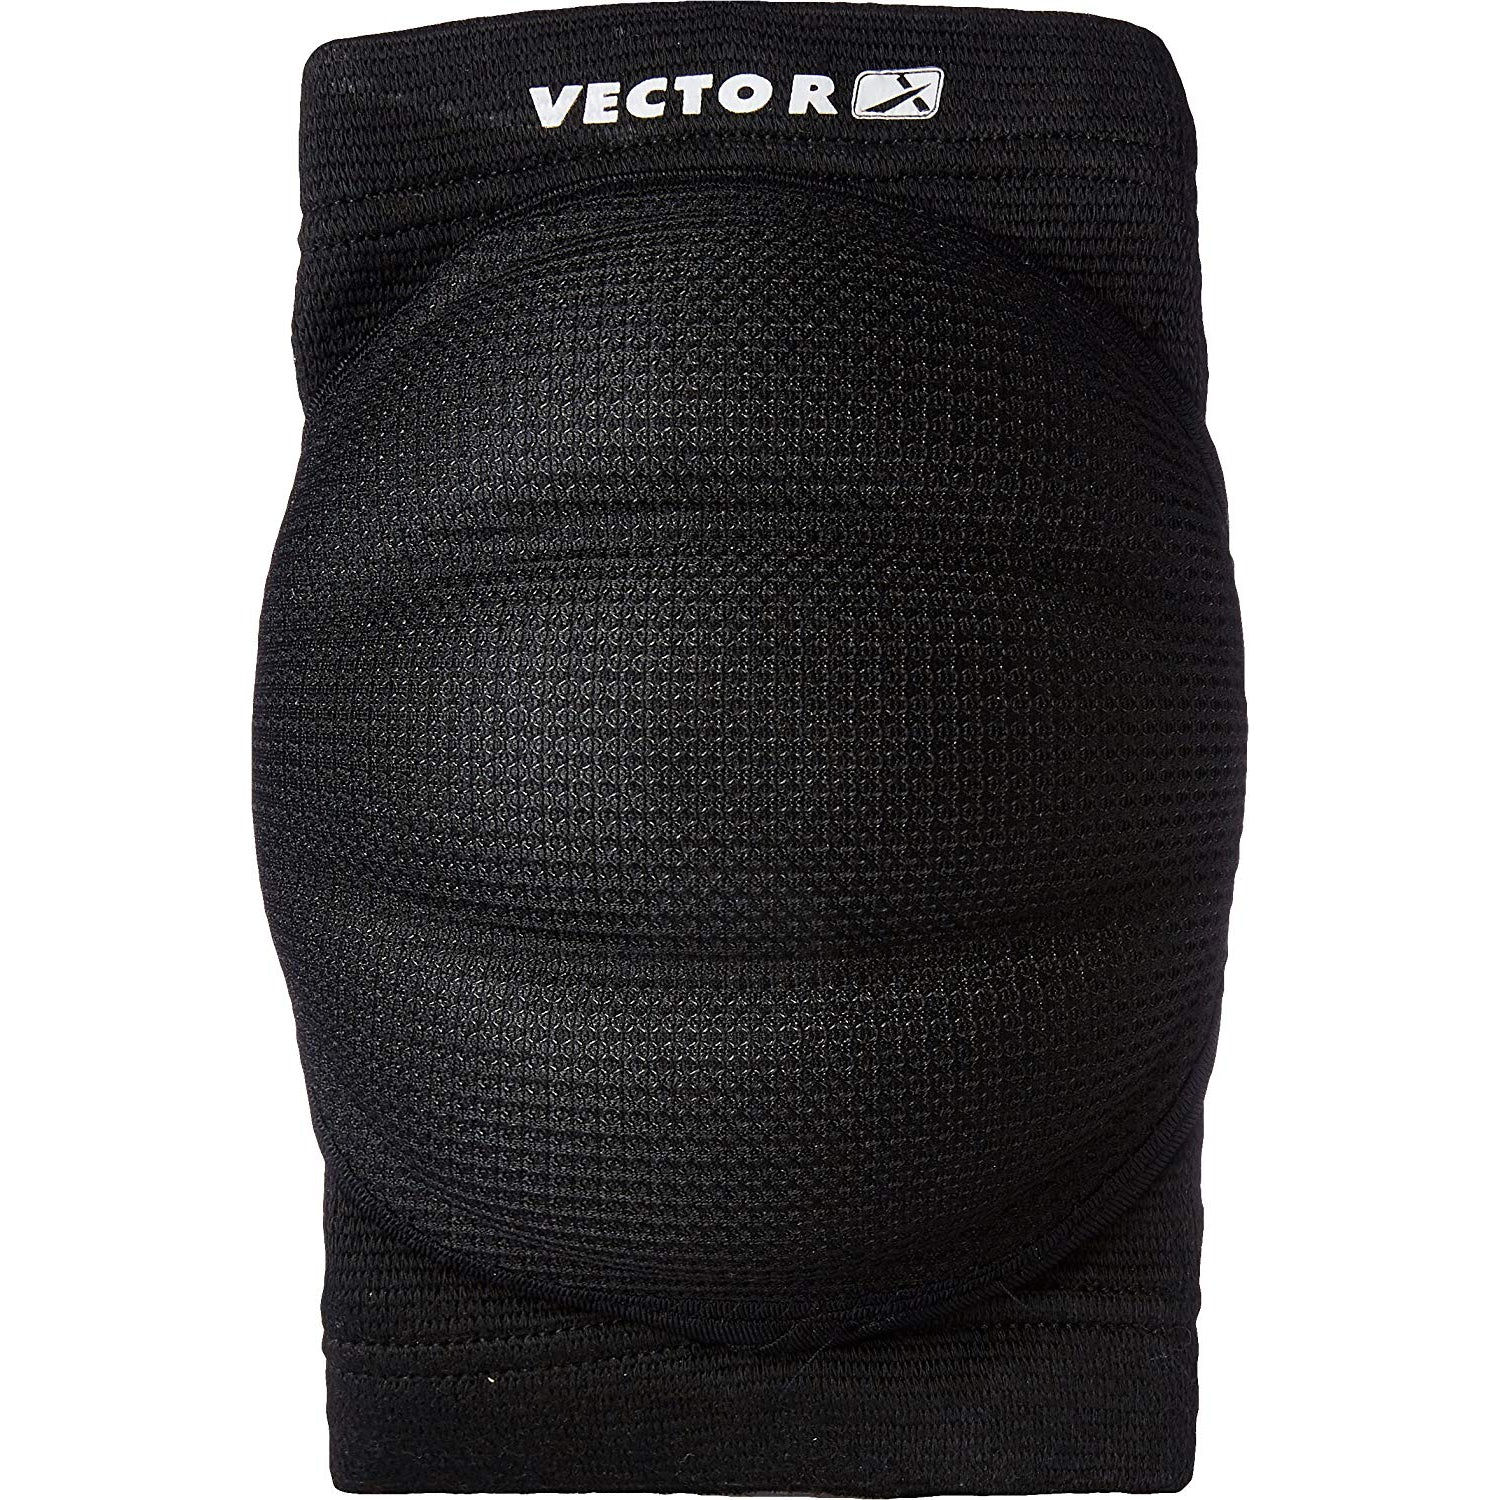 Vector X Moulded Knee Pad (Black) - Best Price online Prokicksports.com